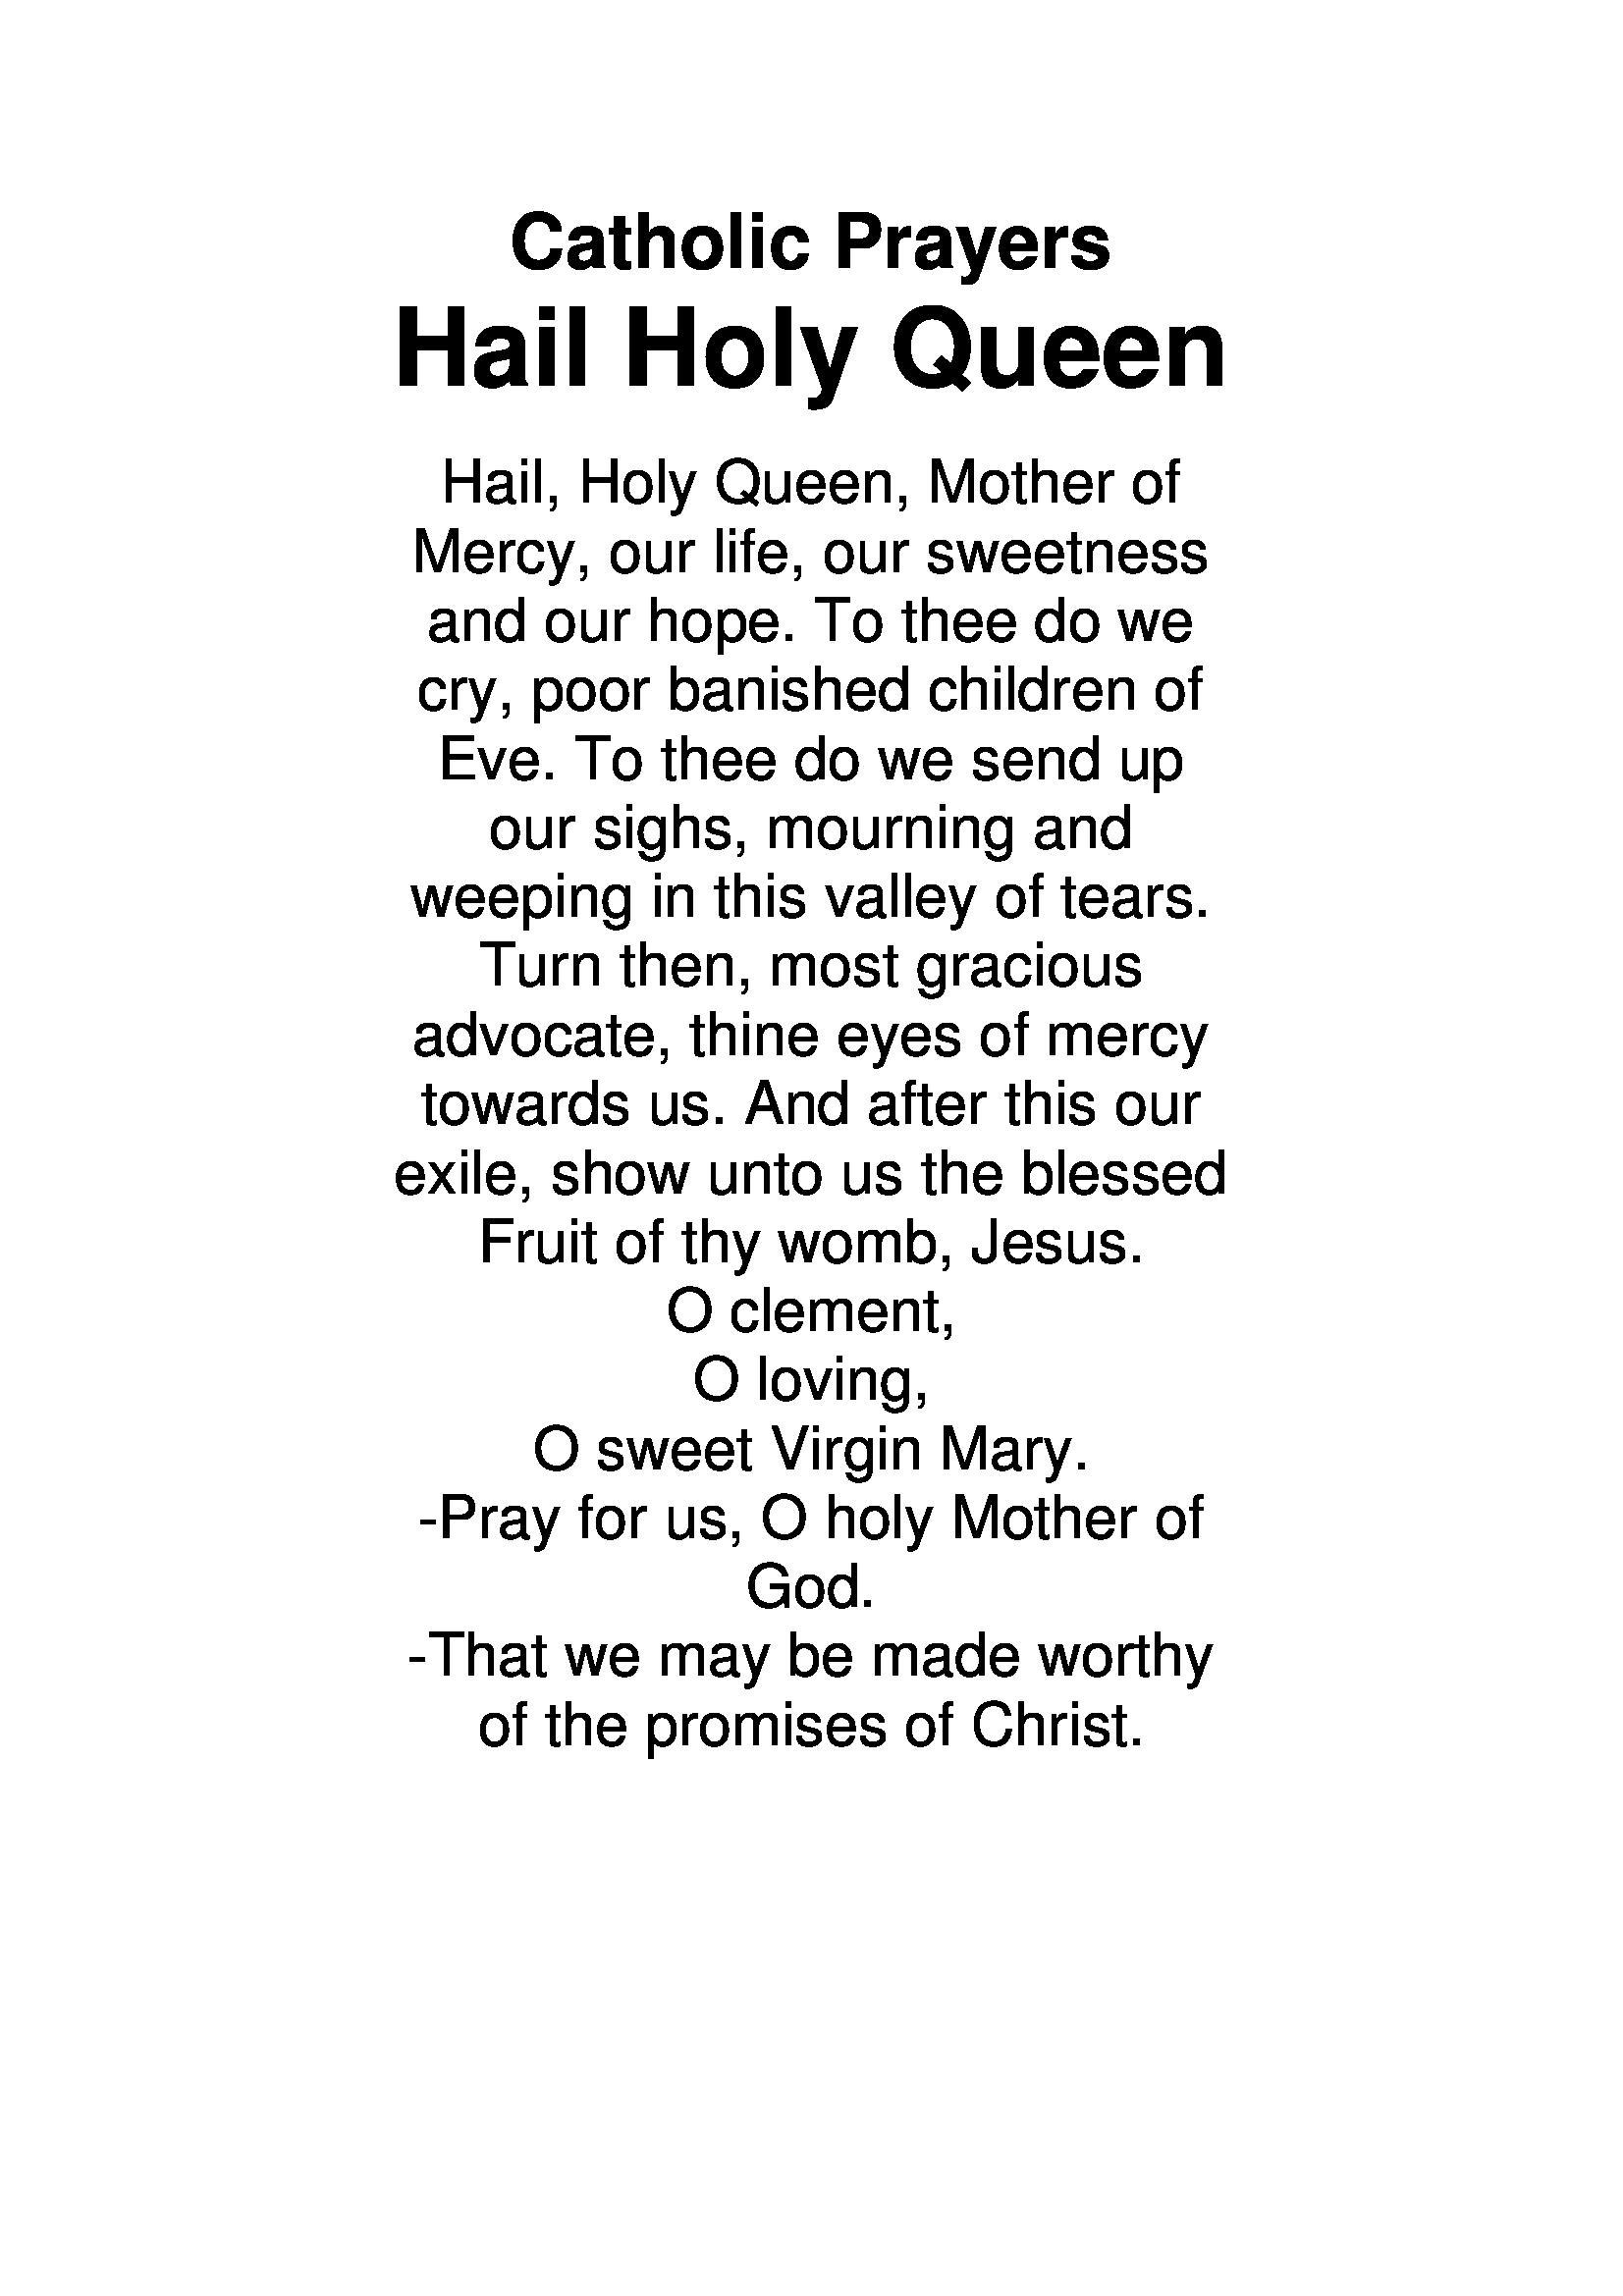 hail-holy-queen-prayer-printable